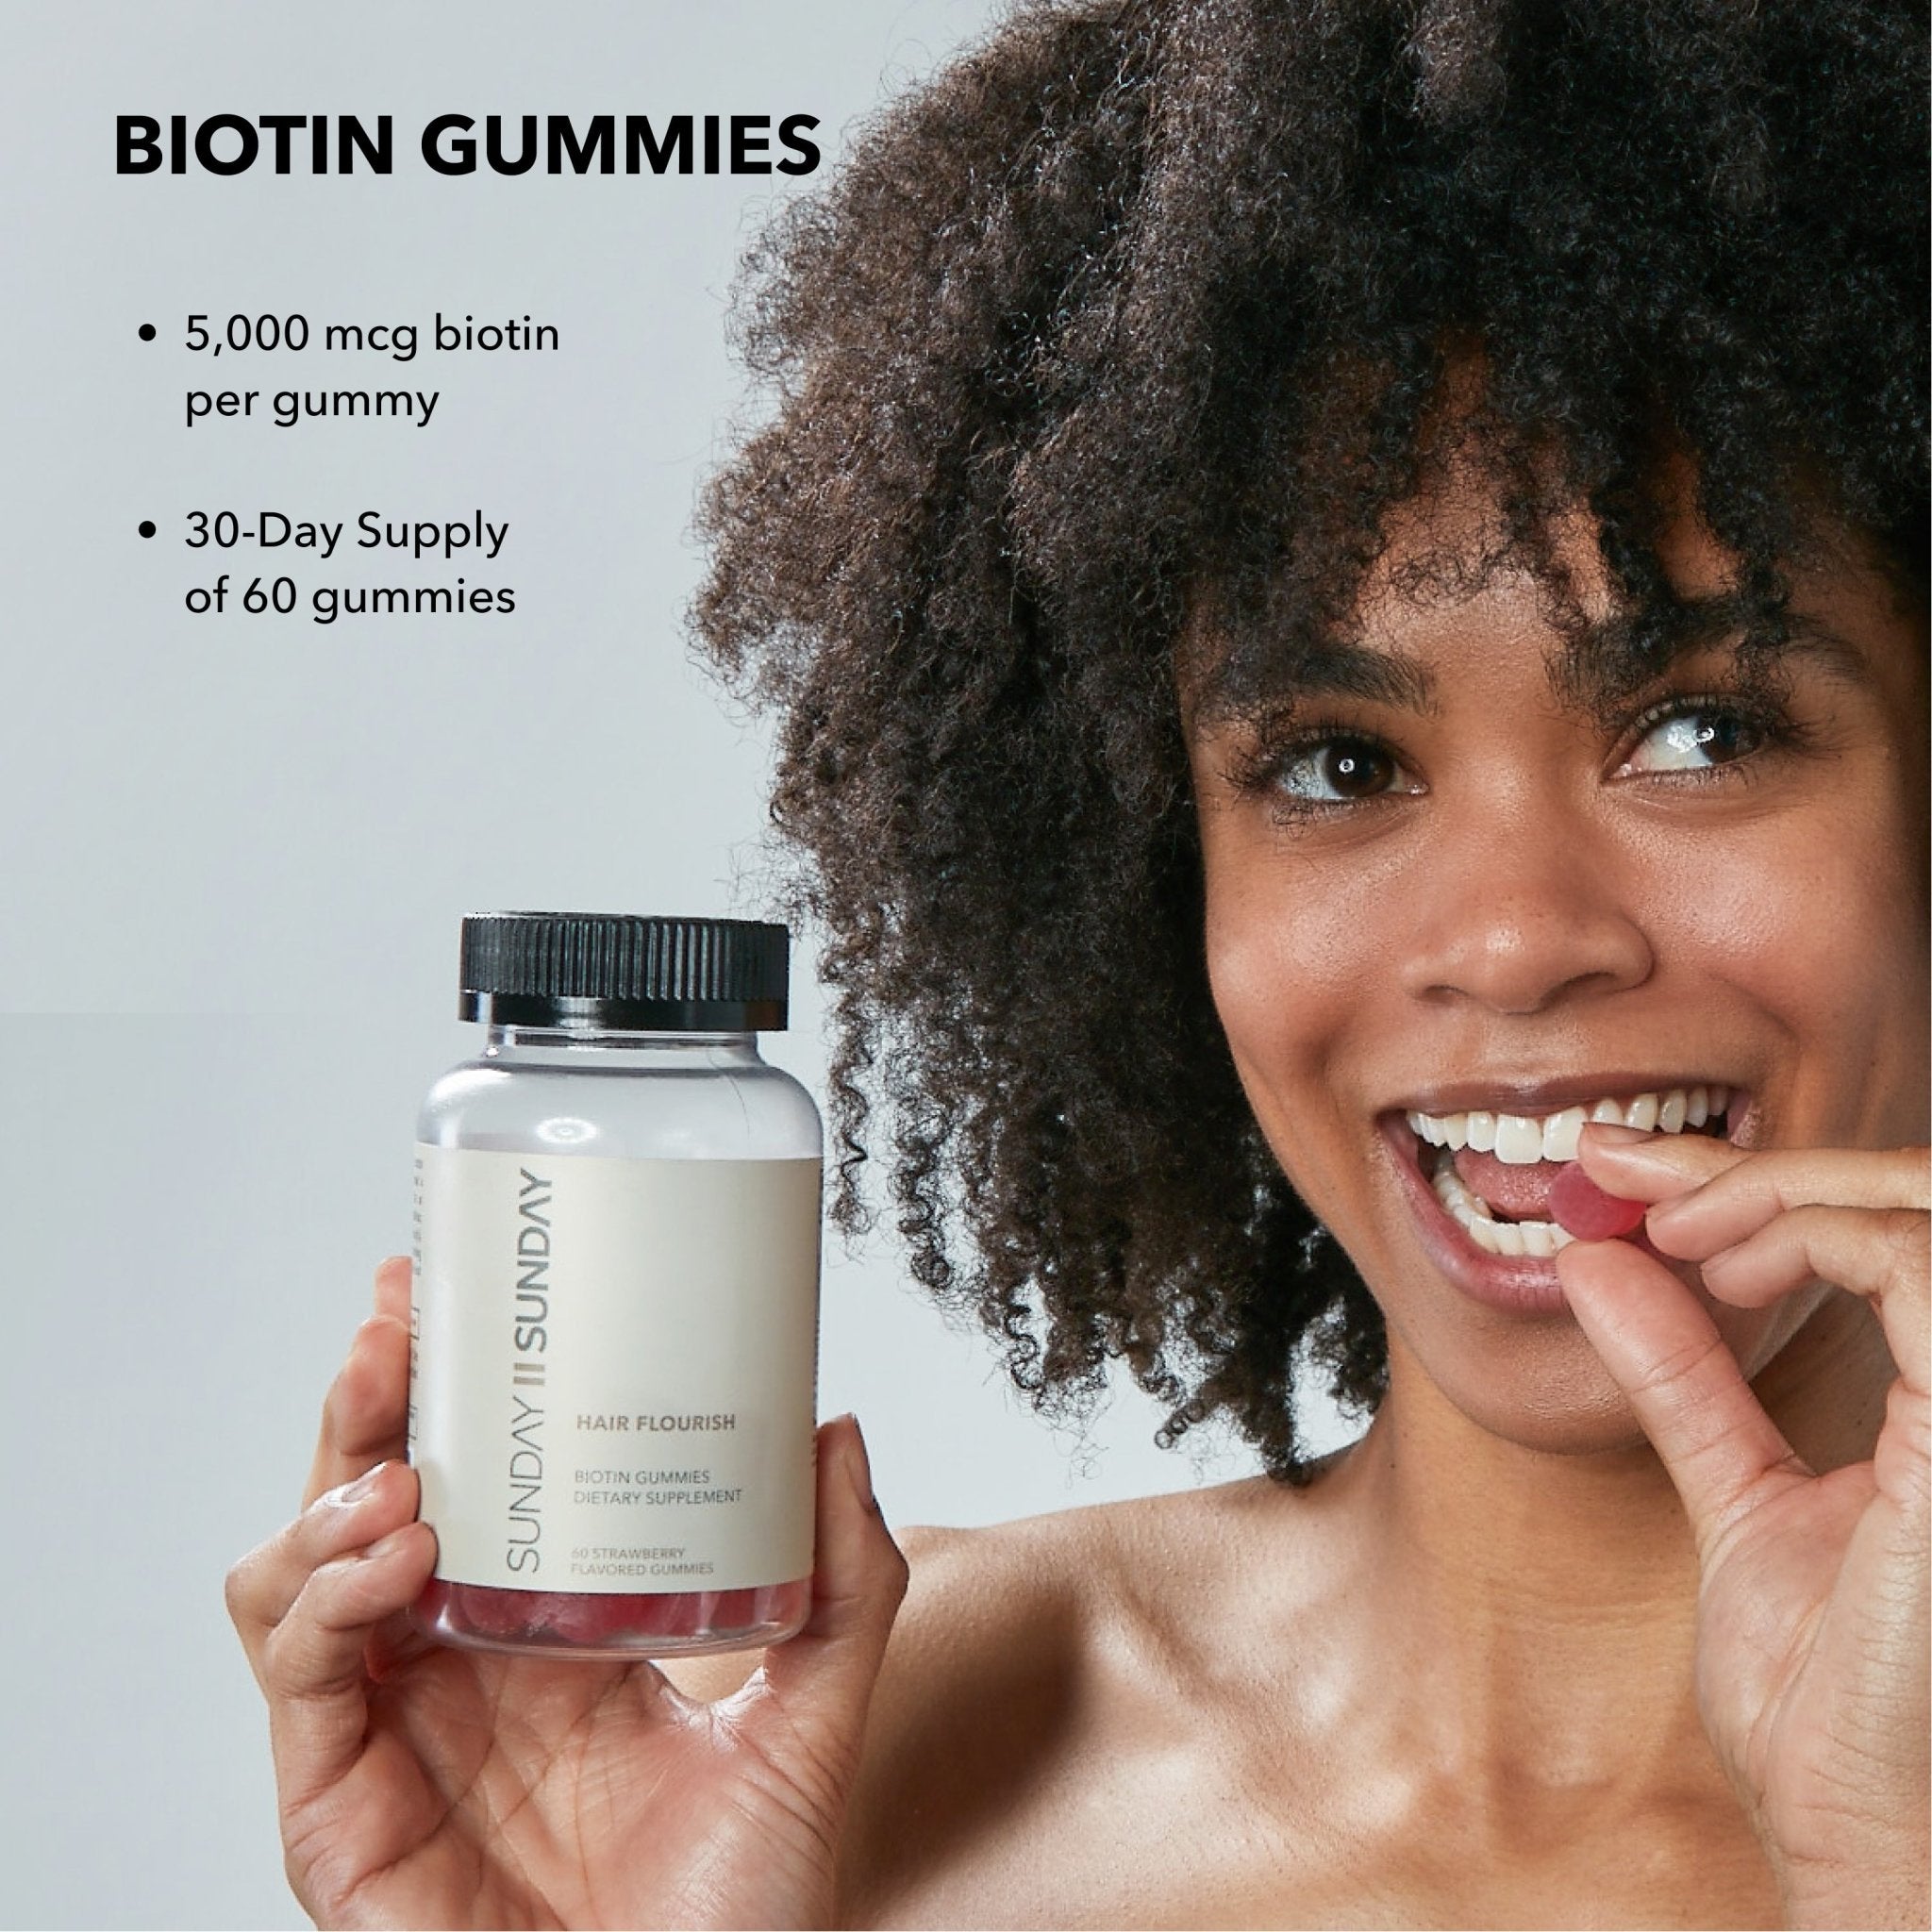 HAIR FLOURISH Vegan Biotin Gummies - SUNDAY II SUNDAY